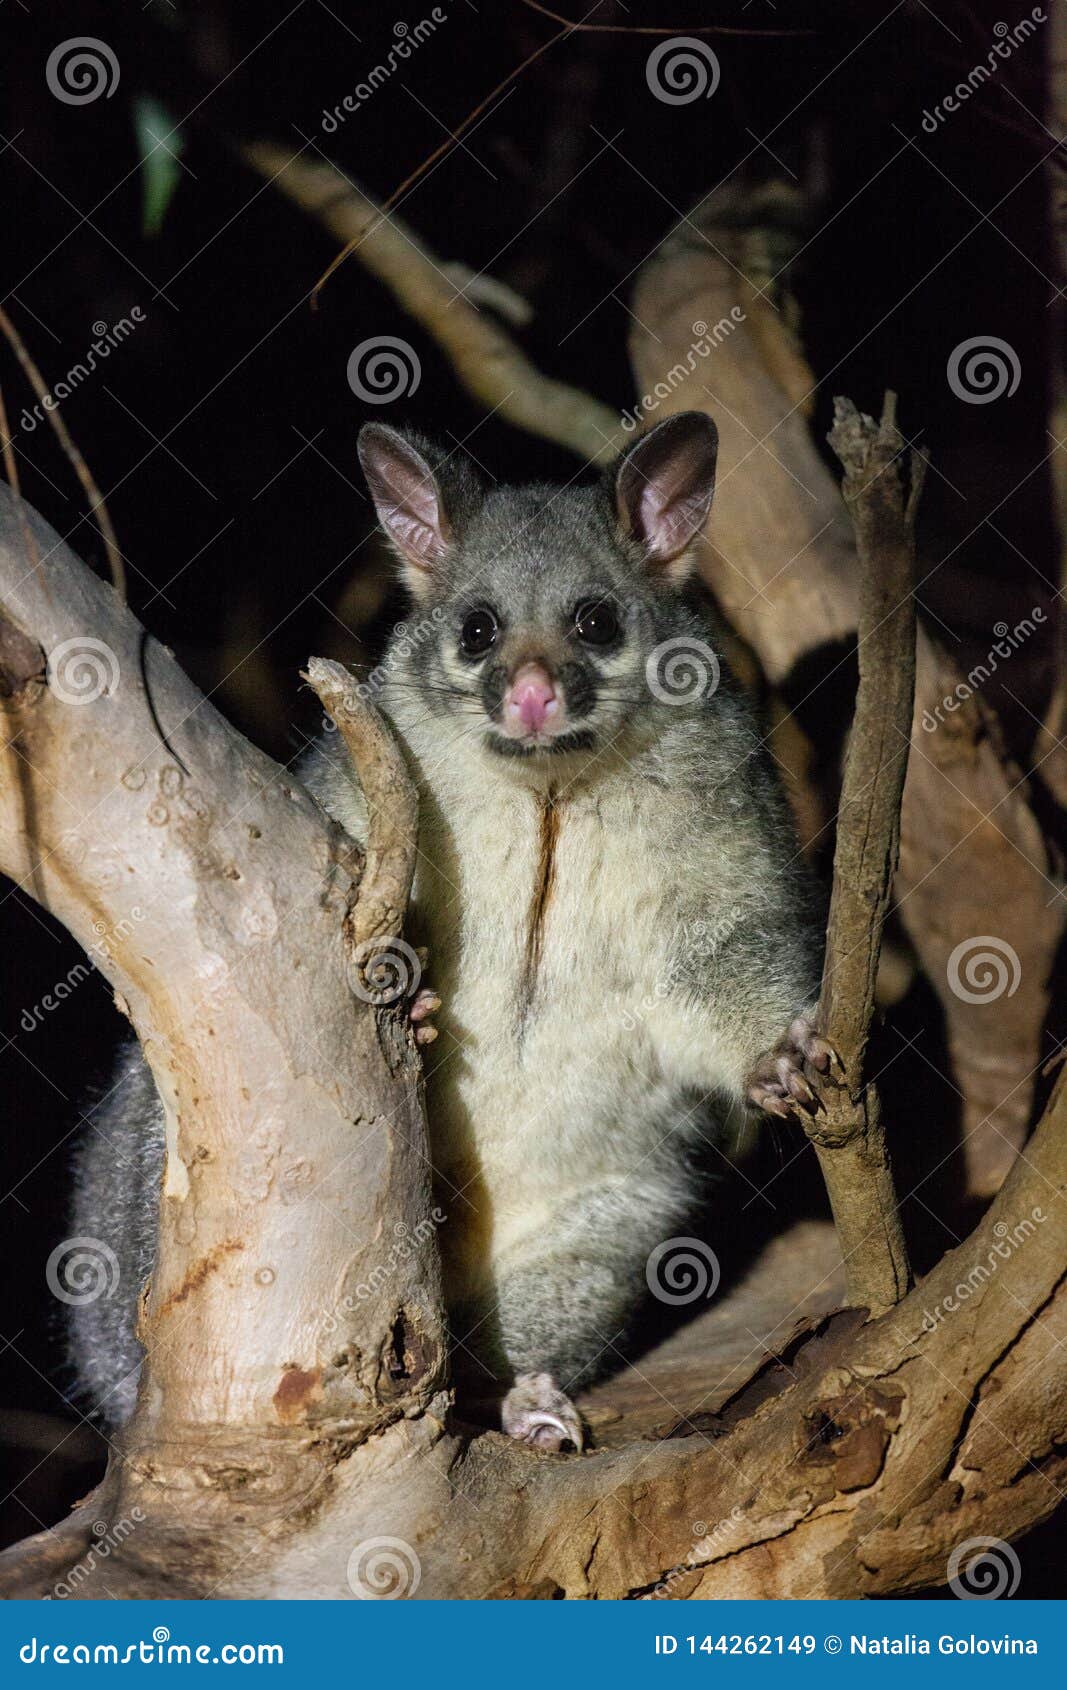 1,082 Australia Possum Photos - & Royalty-Free Stock Photos from Dreamstime